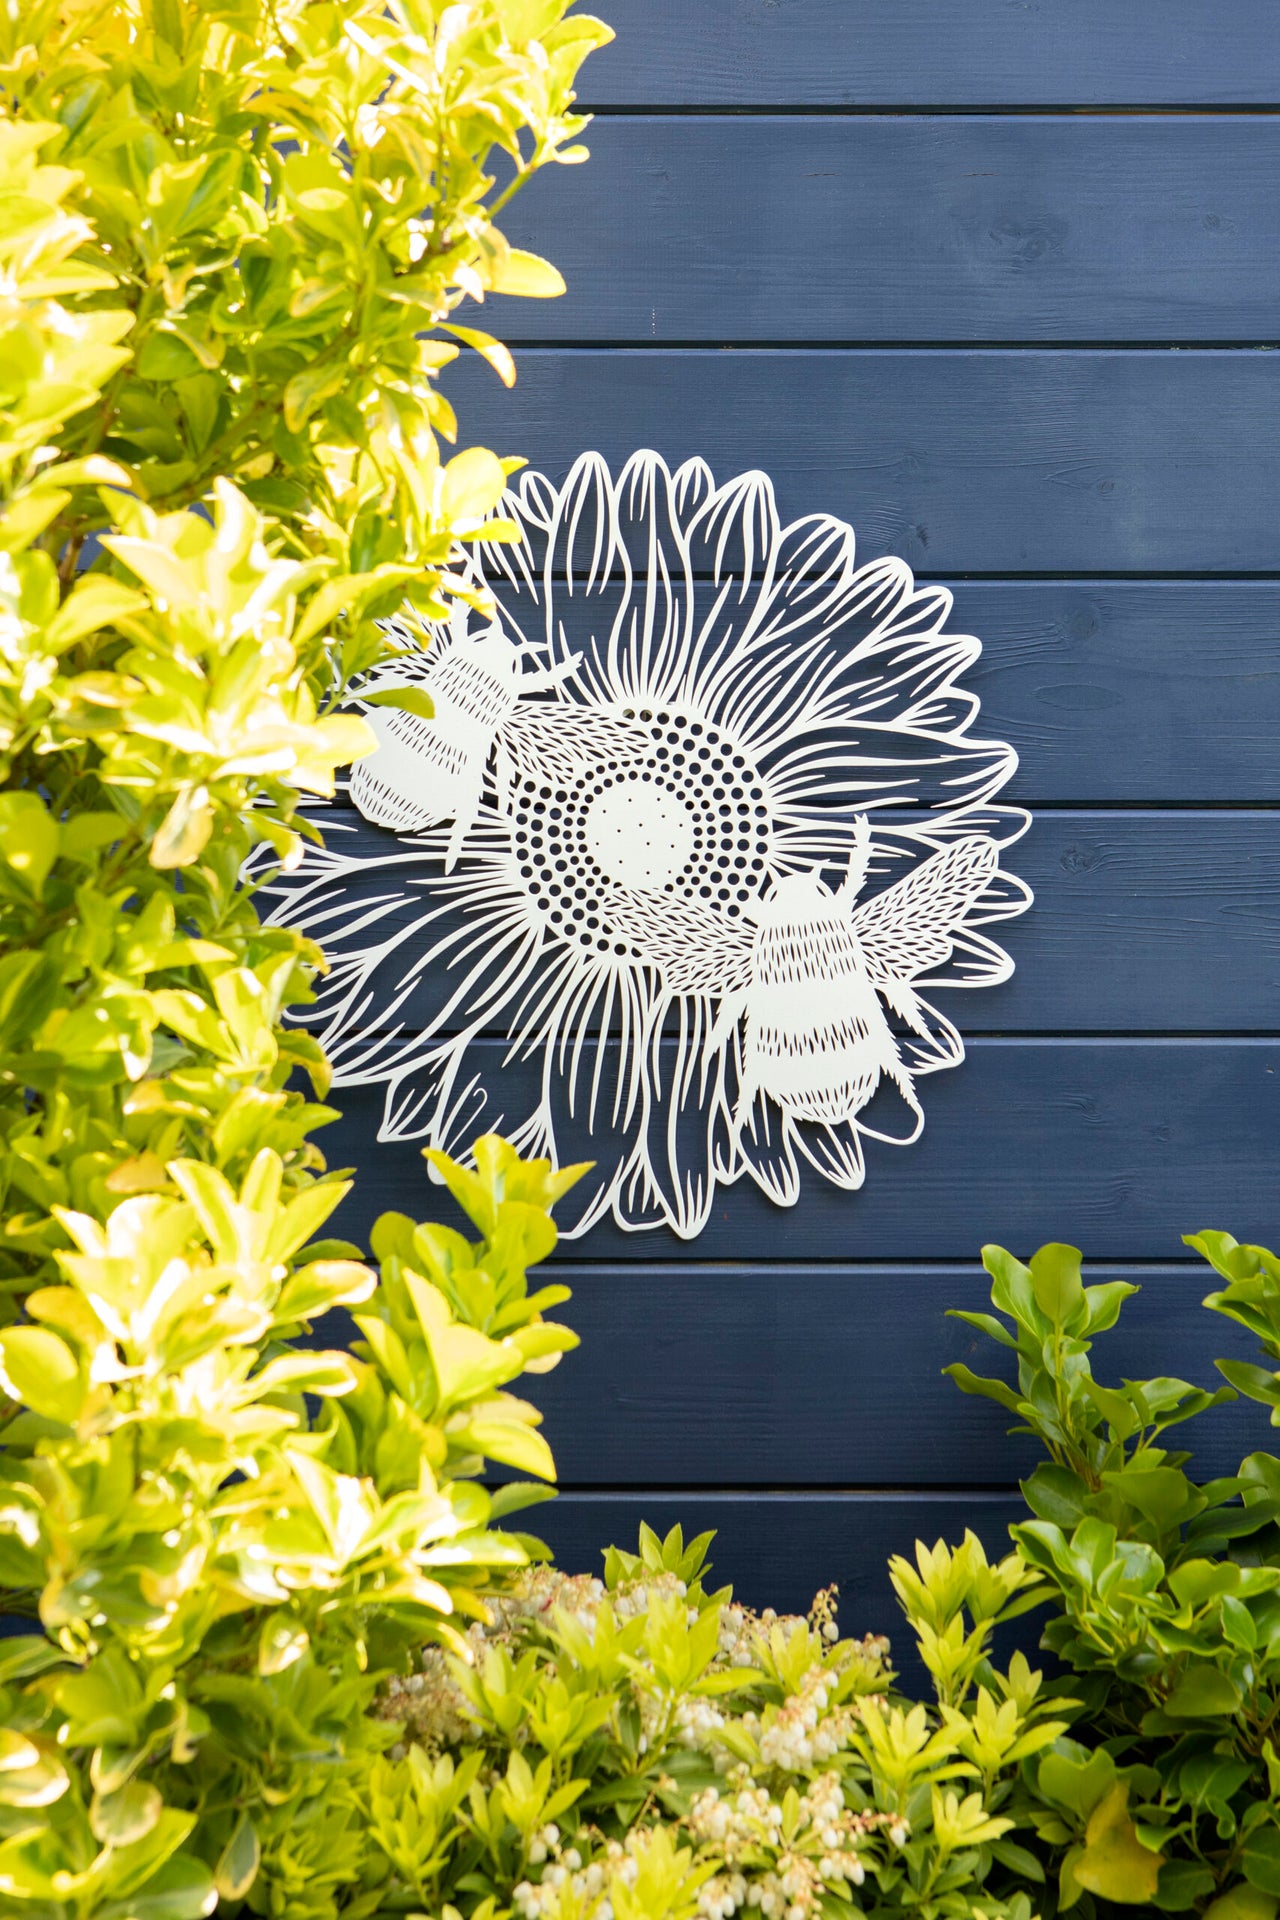 London Ornaments Sunflower Bees Plaque